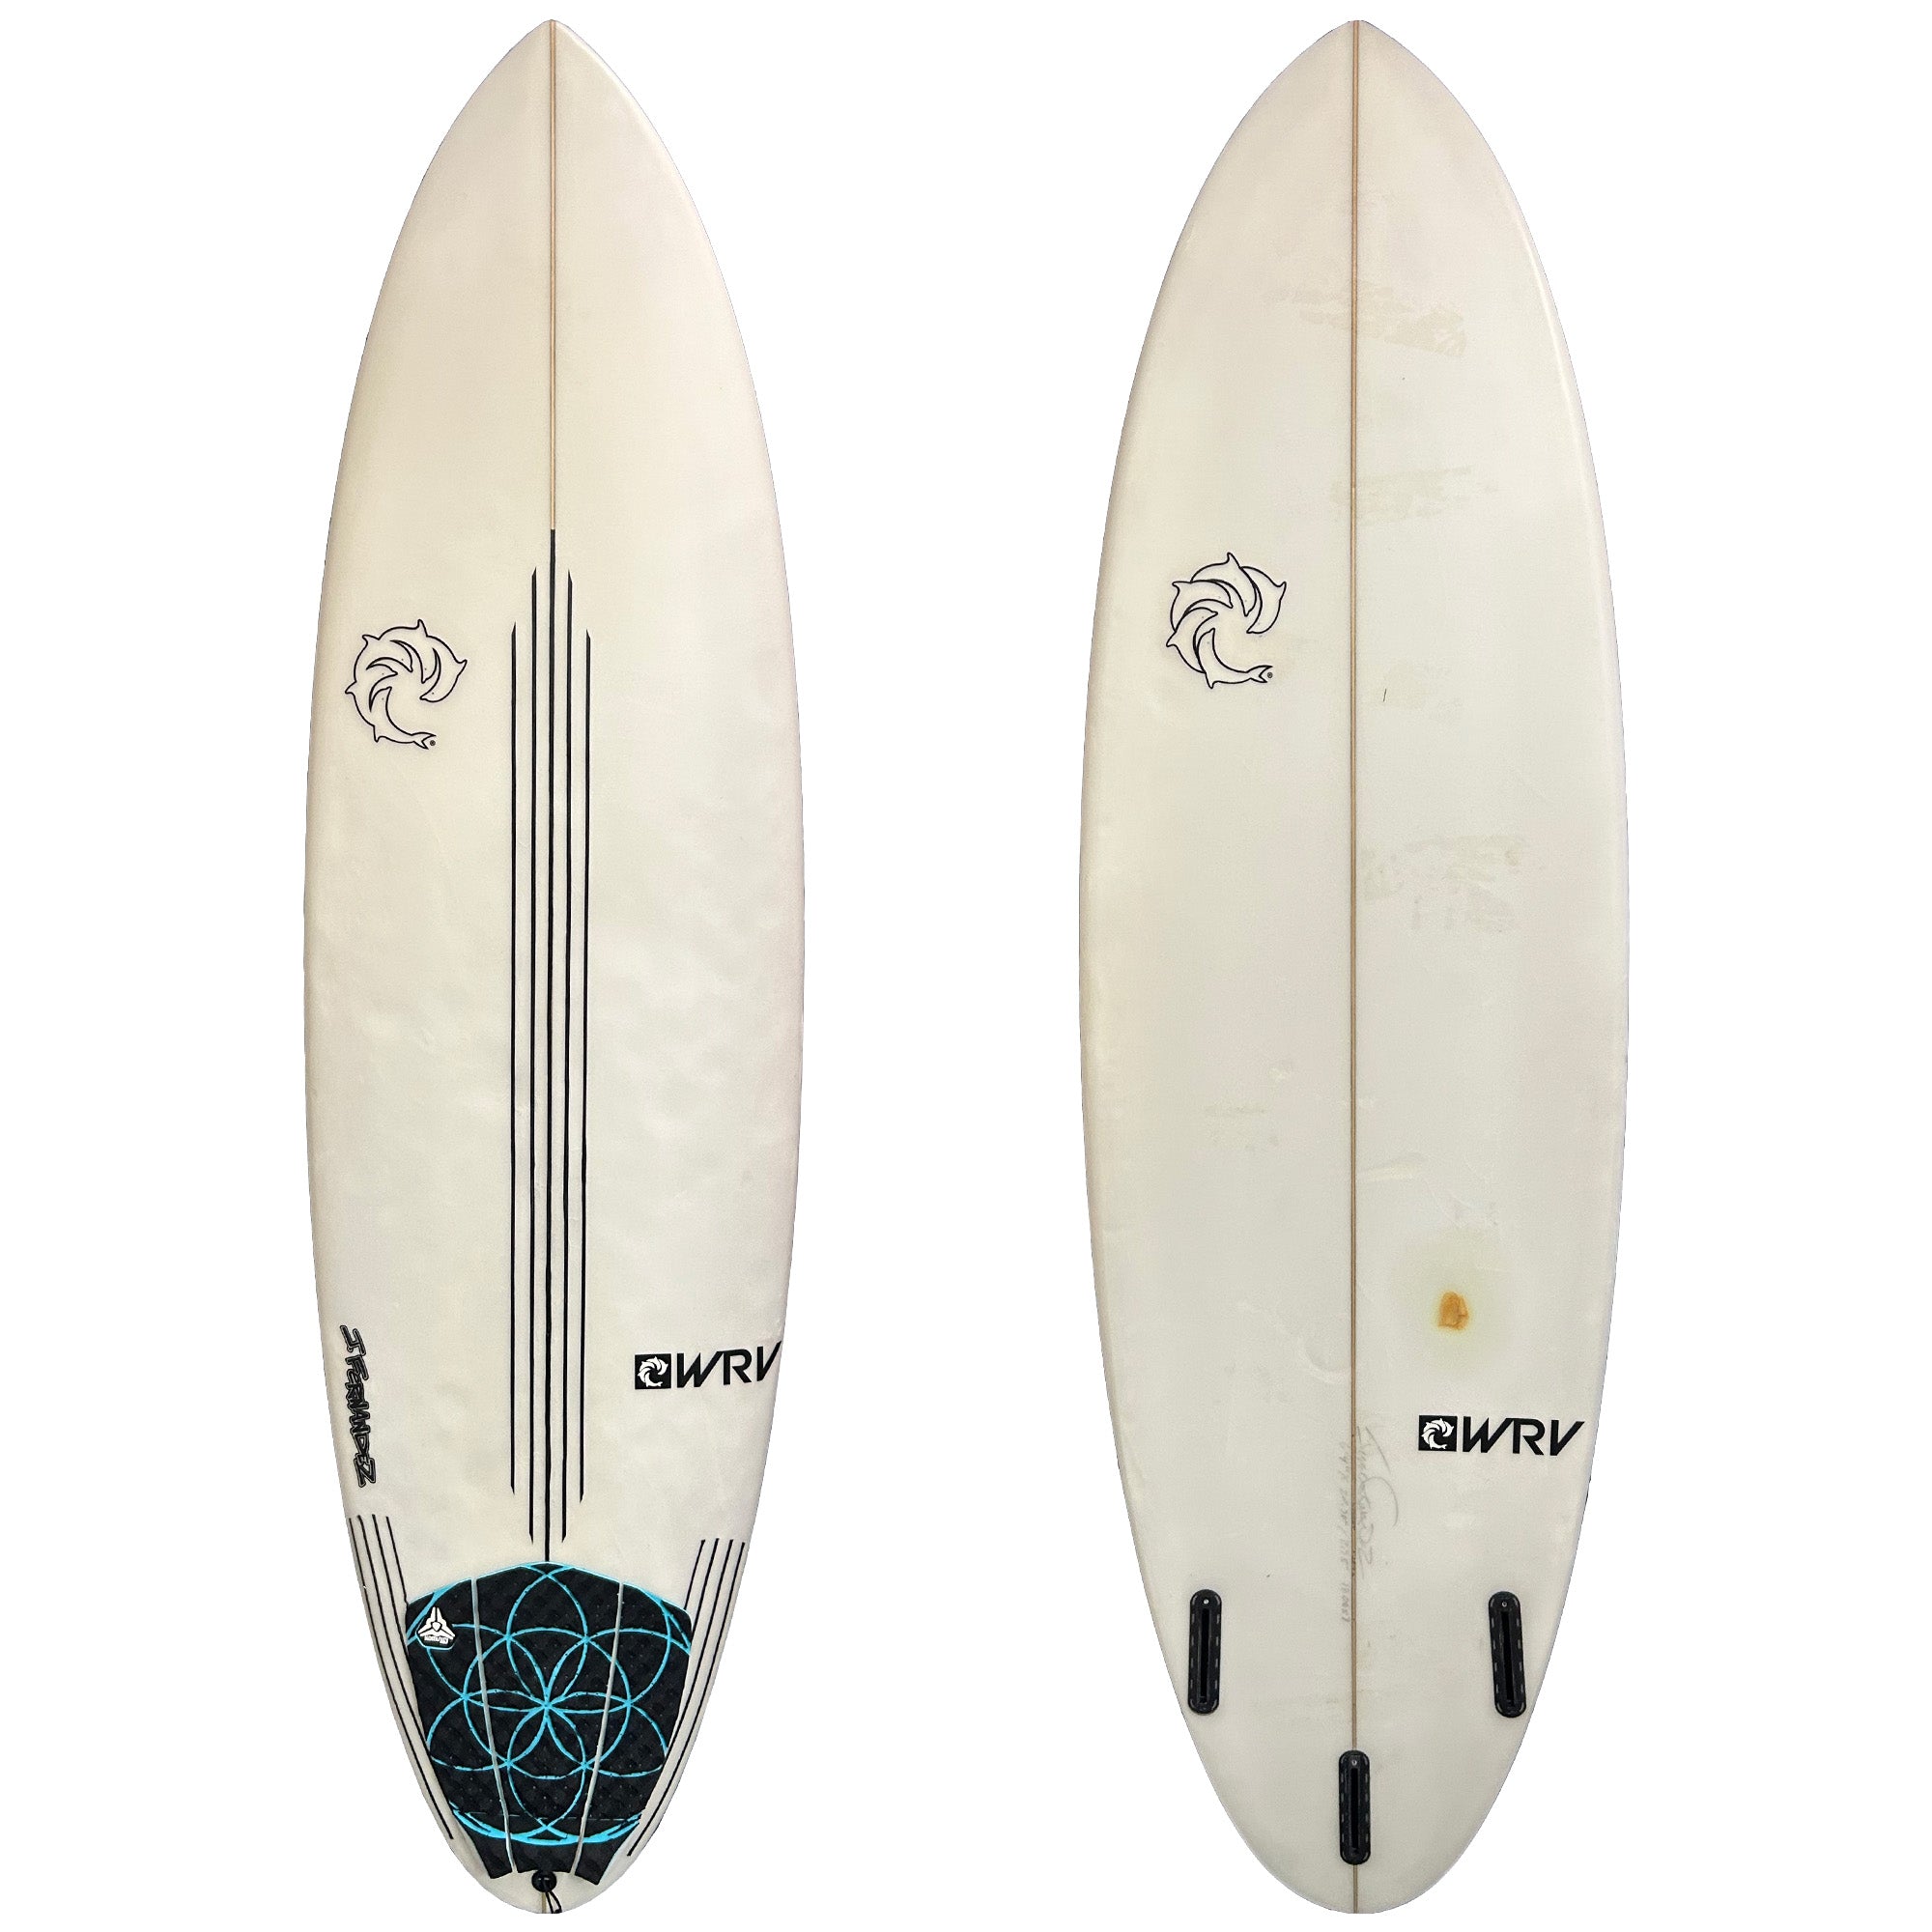 WRV Fernandez 6'4 Consignment Surfboard